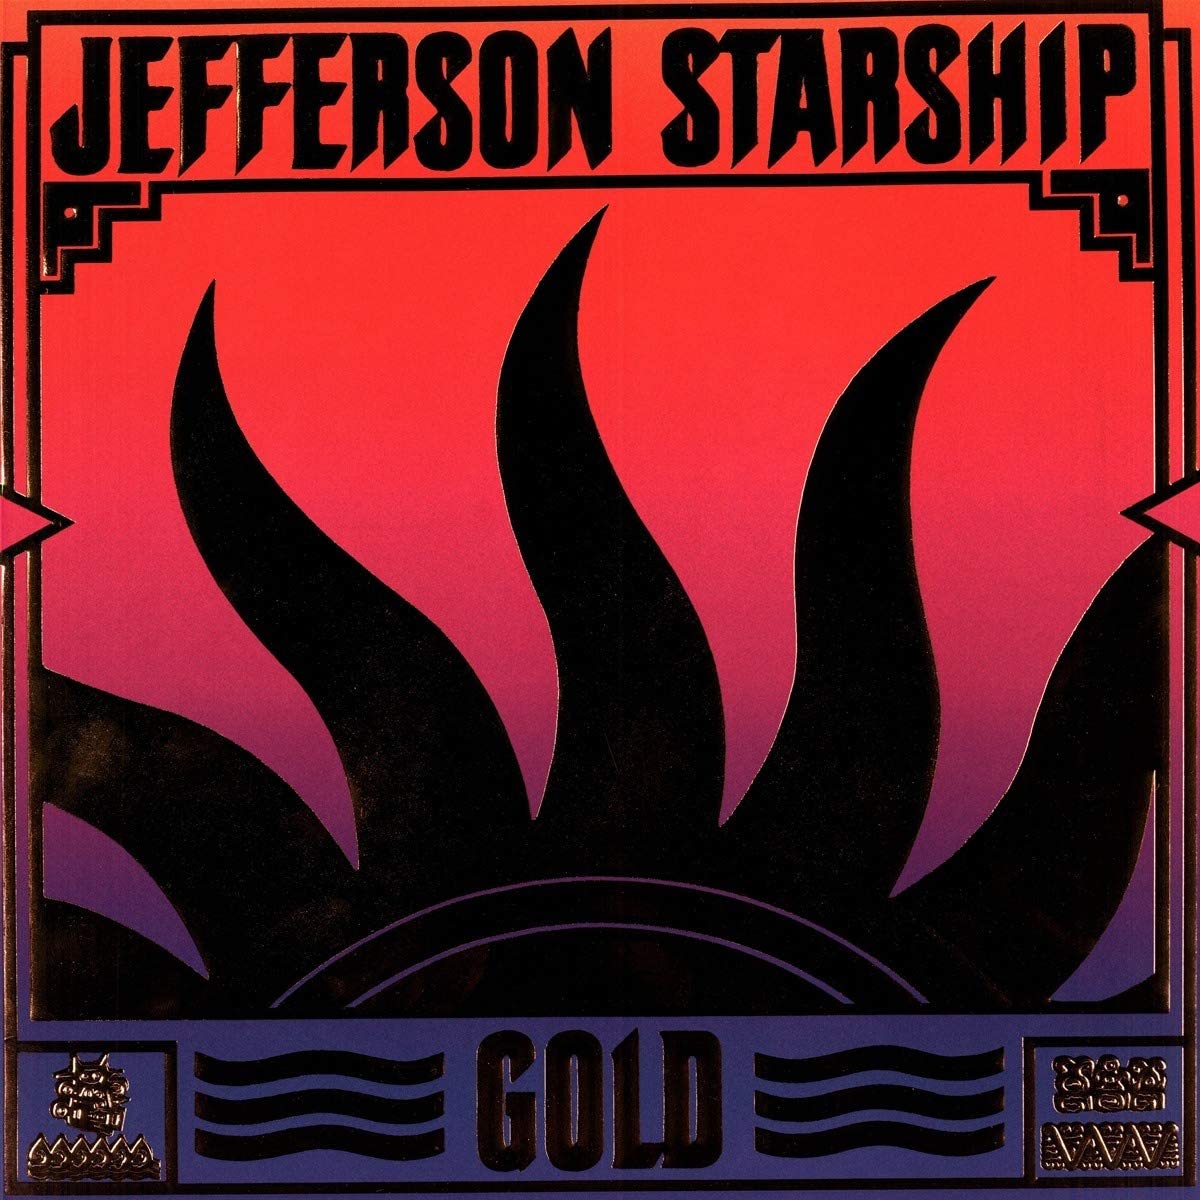 Jefferson Starship Gold